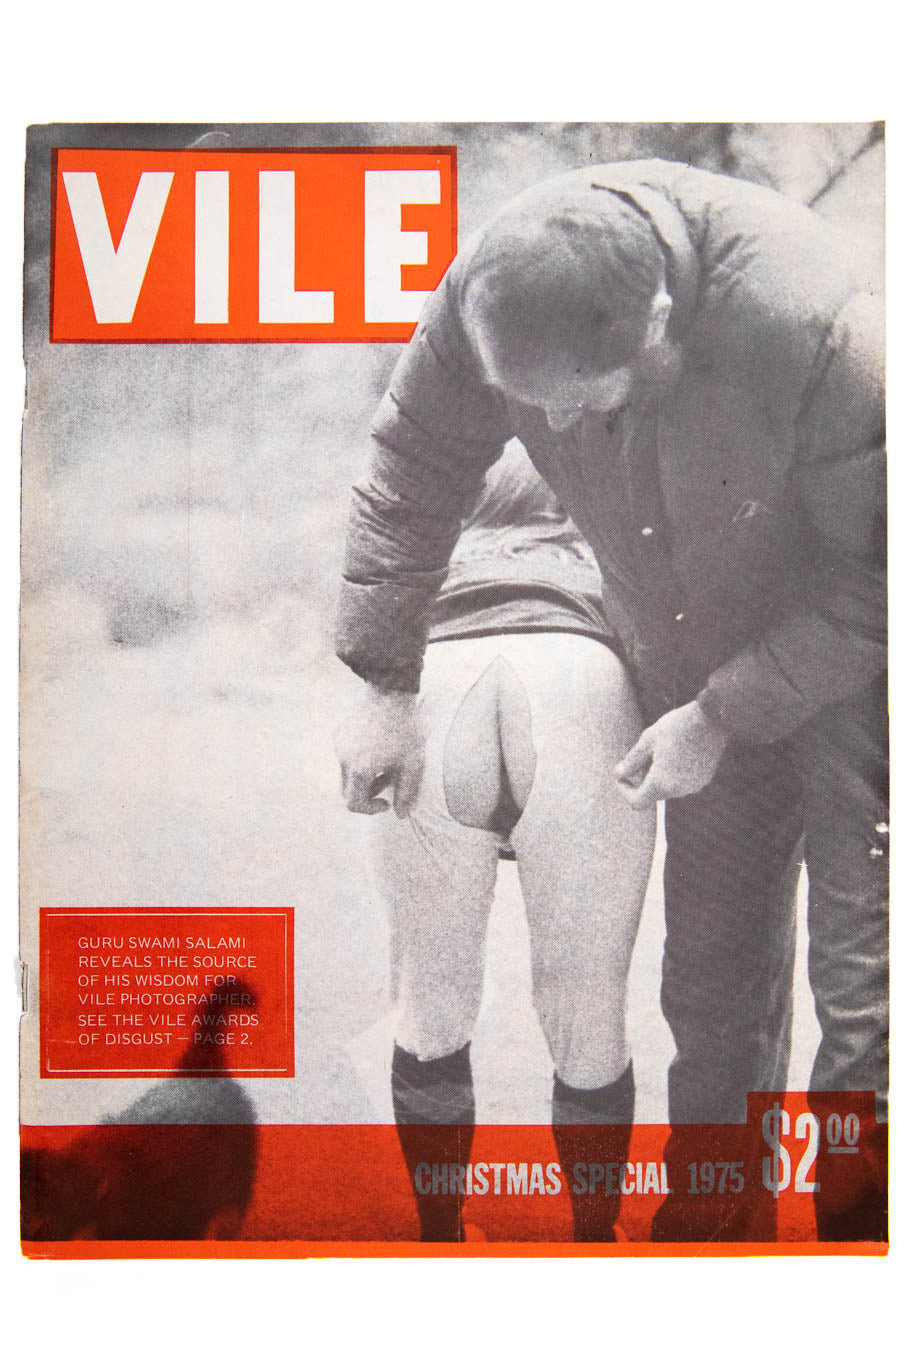 VILE MAGAZINE | Vol. 3 No. 1 Dec. 1975